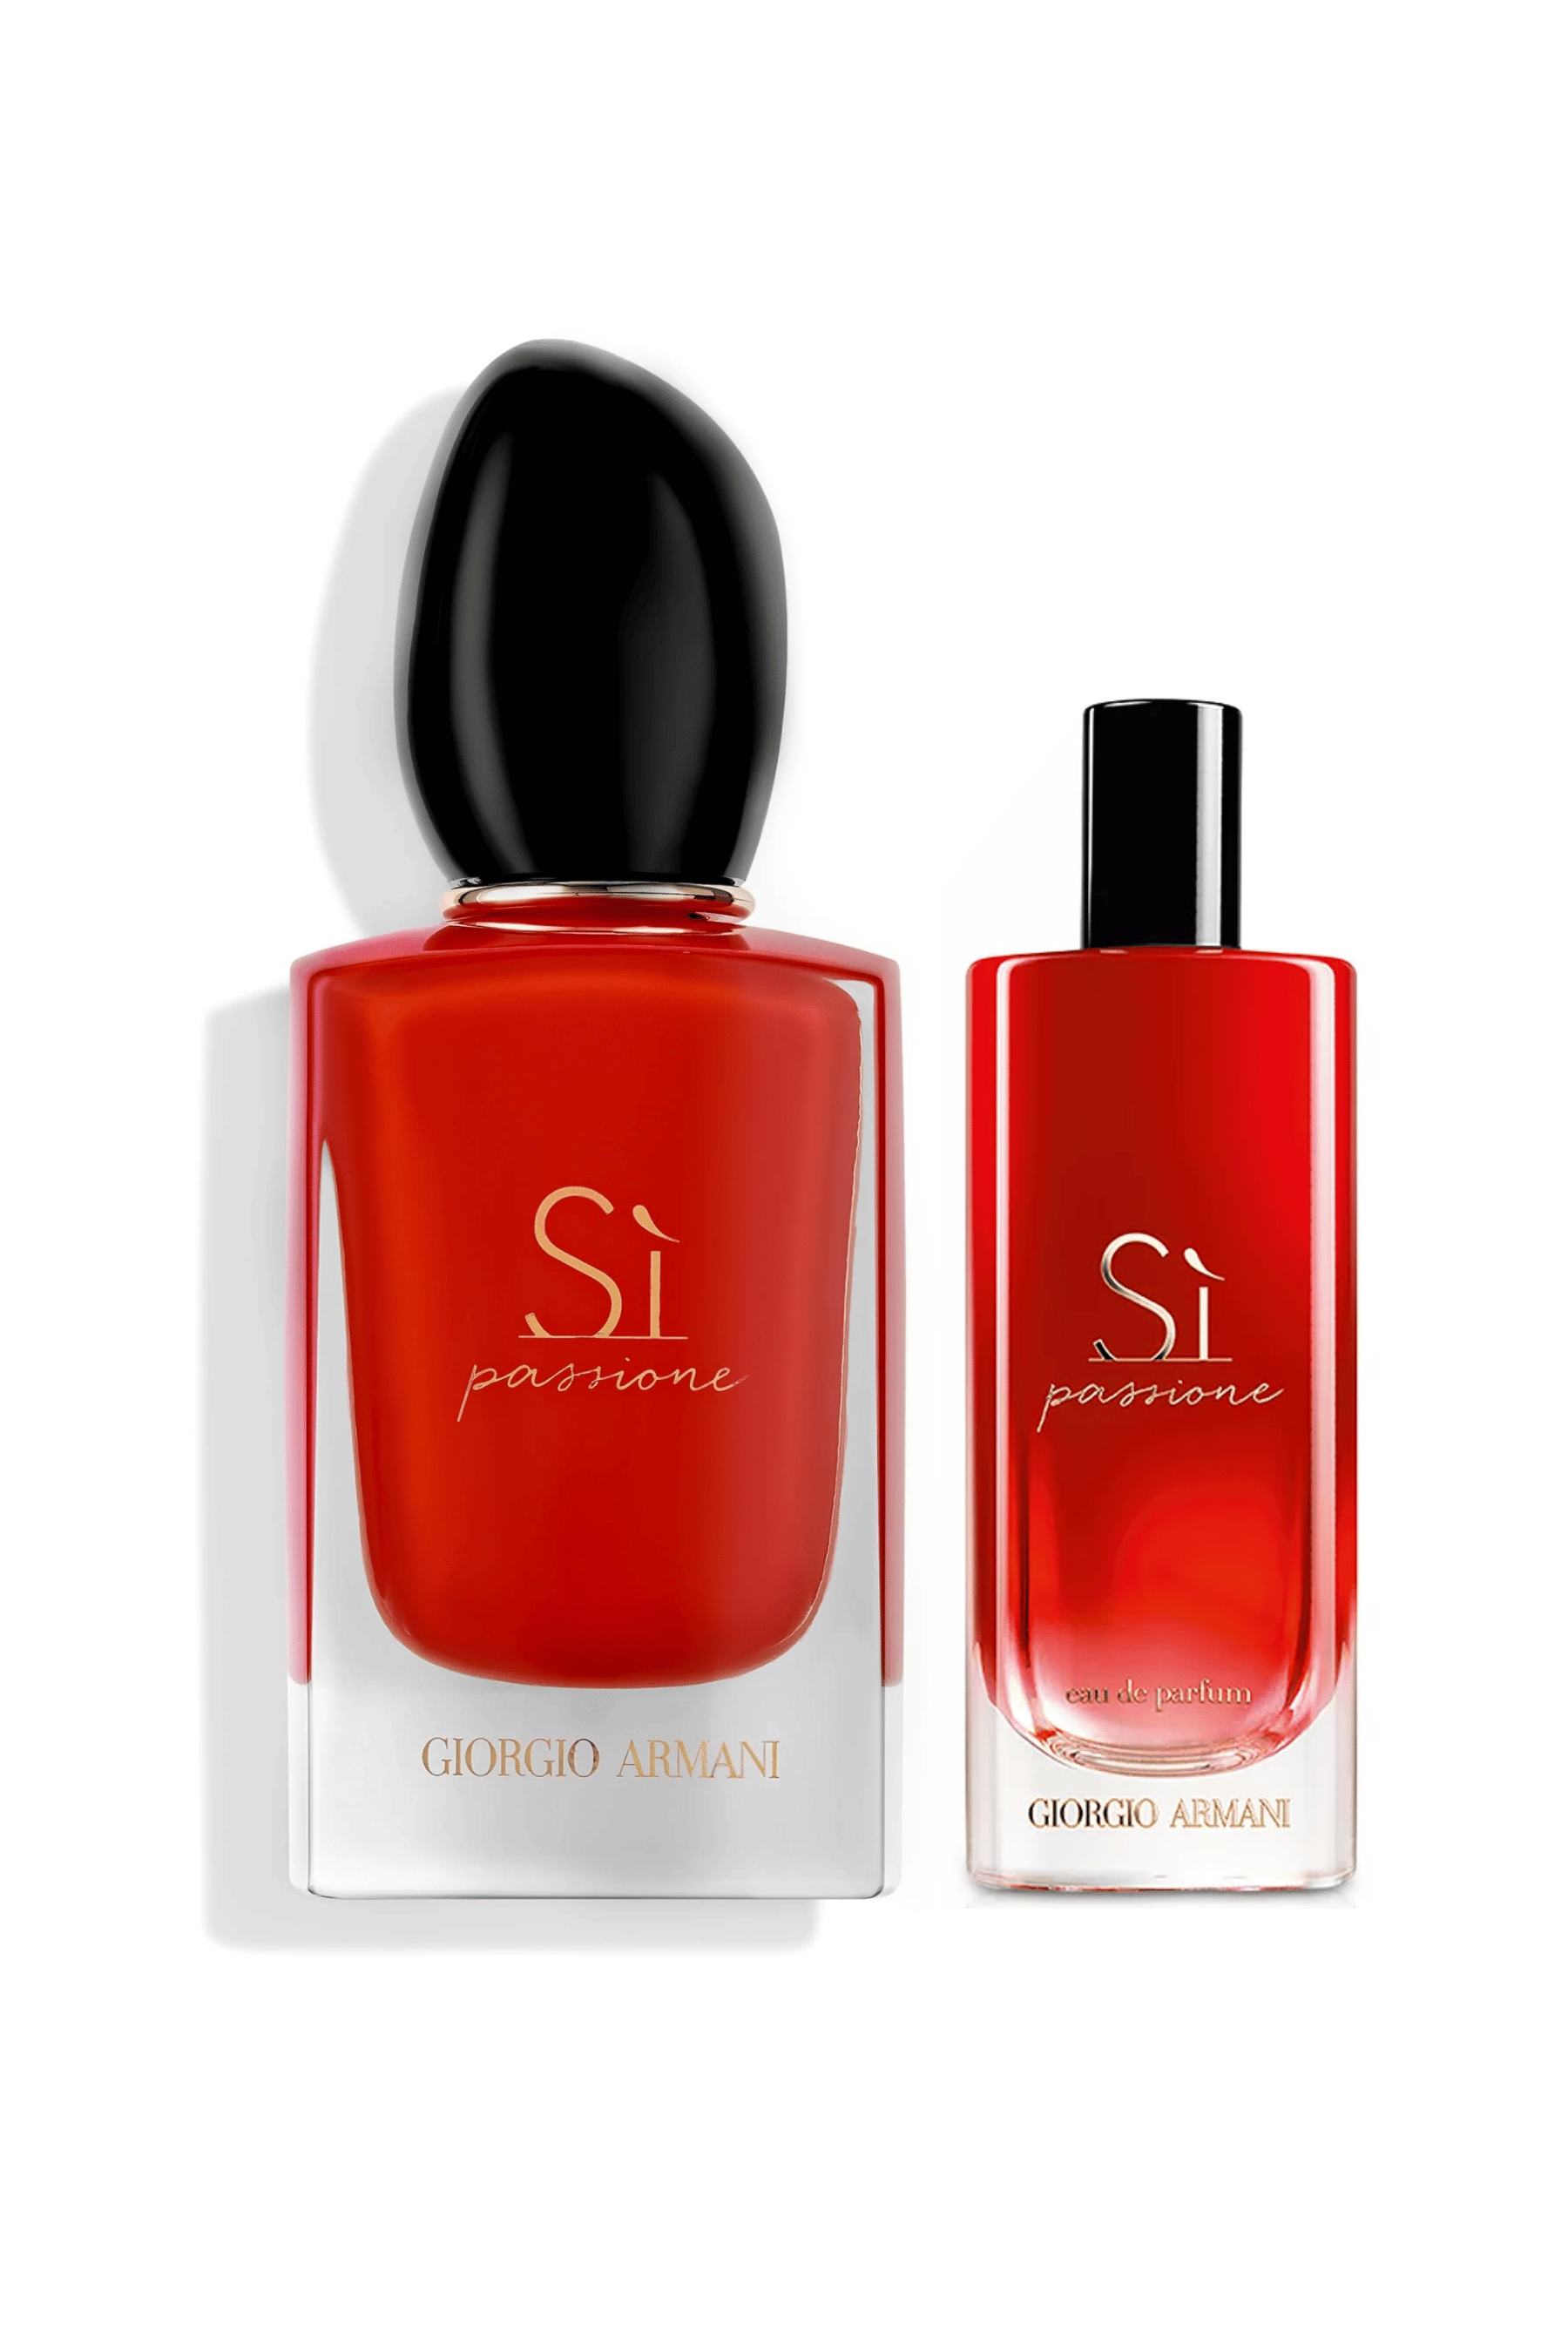 Giorgio Armani | Sì Passione Eau de Parfum Travel Collection Set